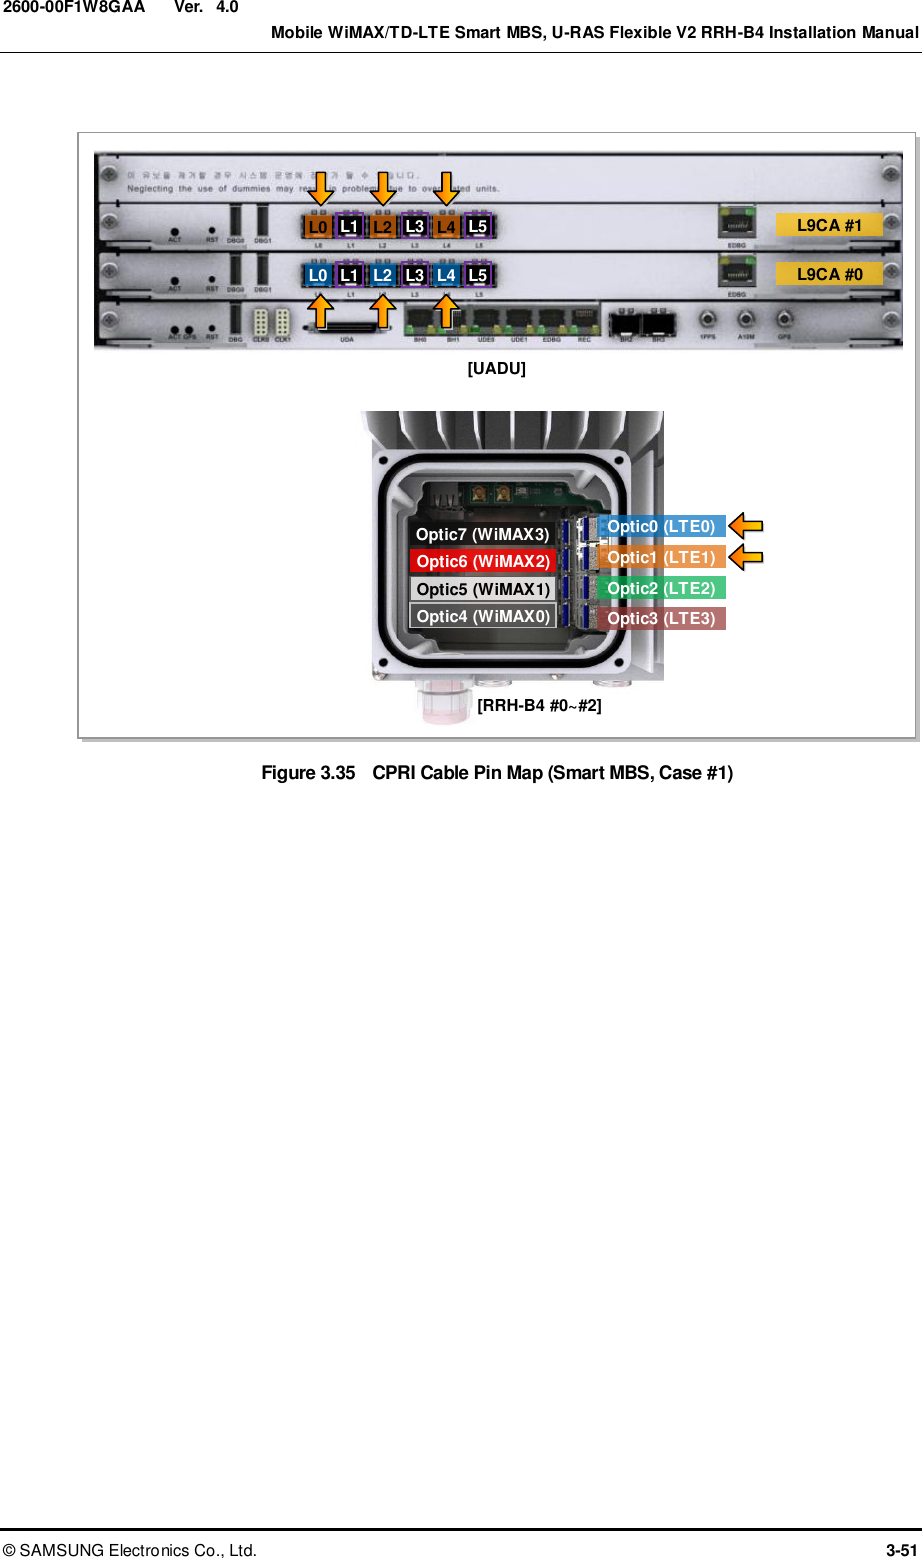  Ver.    Mobile WiMAX/TD-LTE Smart MBS, U-RAS Flexible V2 RRH-B4 Installation Manual ©  SAMSUNG Electronics Co., Ltd.  3-51 2600-00F1W8GAA 4.0  Figure 3.35  CPRI Cable Pin Map (Smart MBS, Case #1)  L0 L9CA #0 L2 L4 [UADU] L0 L2 L4 Optic0 (LTE0) Optic1 (LTE1) Optic2 (LTE2) Optic3 (LTE3) Optic4 (WiMAX0) Optic6 (WiMAX2) Optic5 (WiMAX1) Optic7 (WiMAX3) [RRH-B4 #0~#2] L1 L3 L5 L1 L3 L5 L9CA #1 